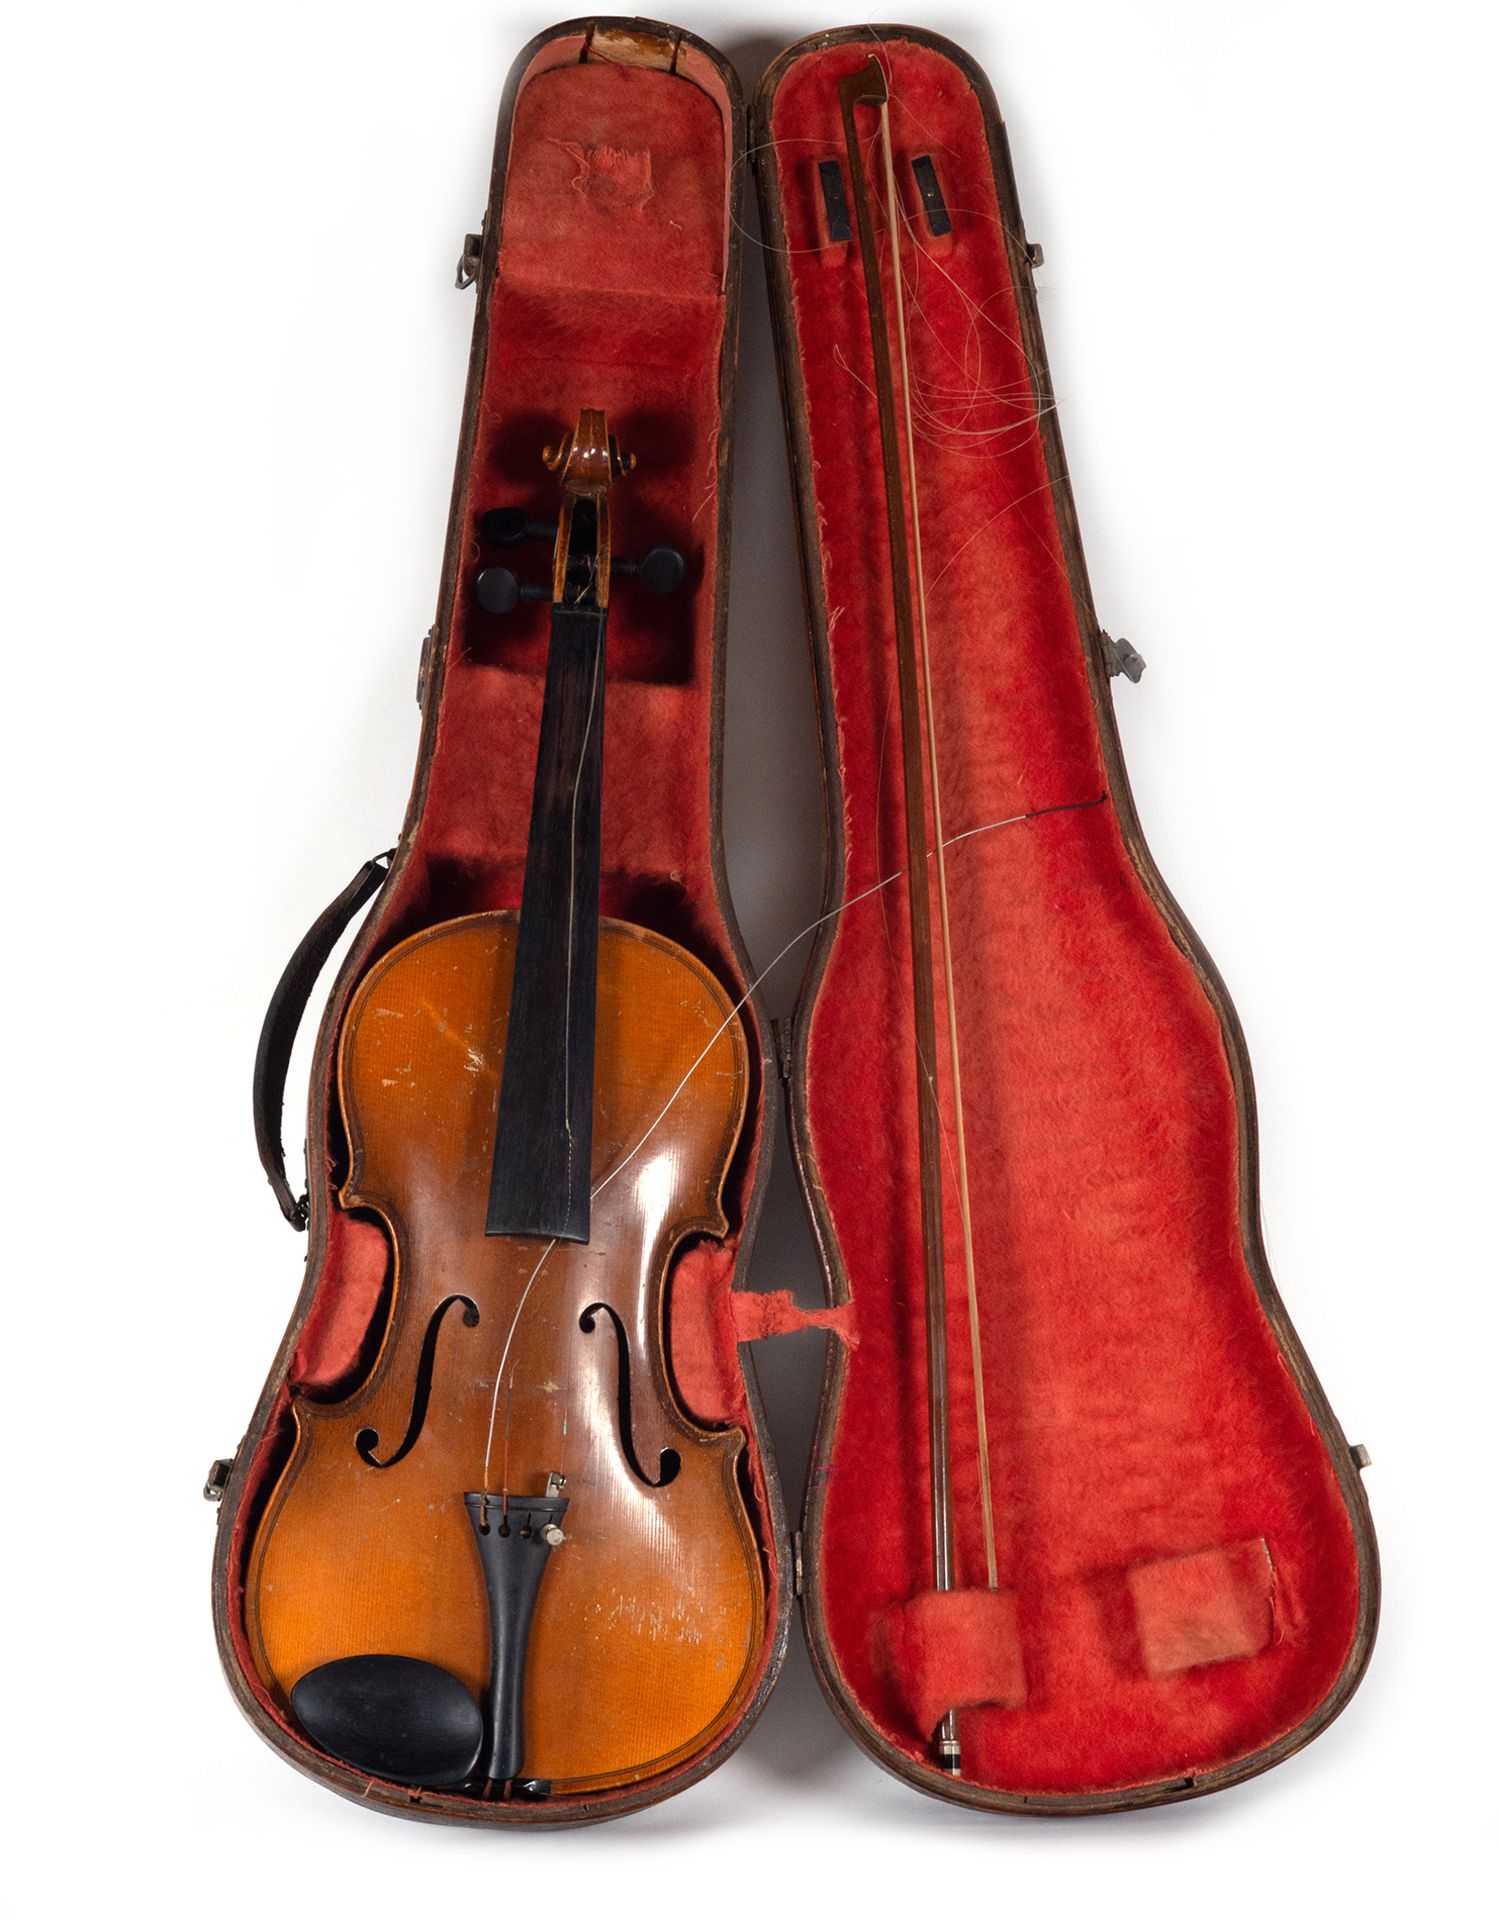 Violin, follower of Francesco Ruggeri, early 20th century - Image 5 of 5